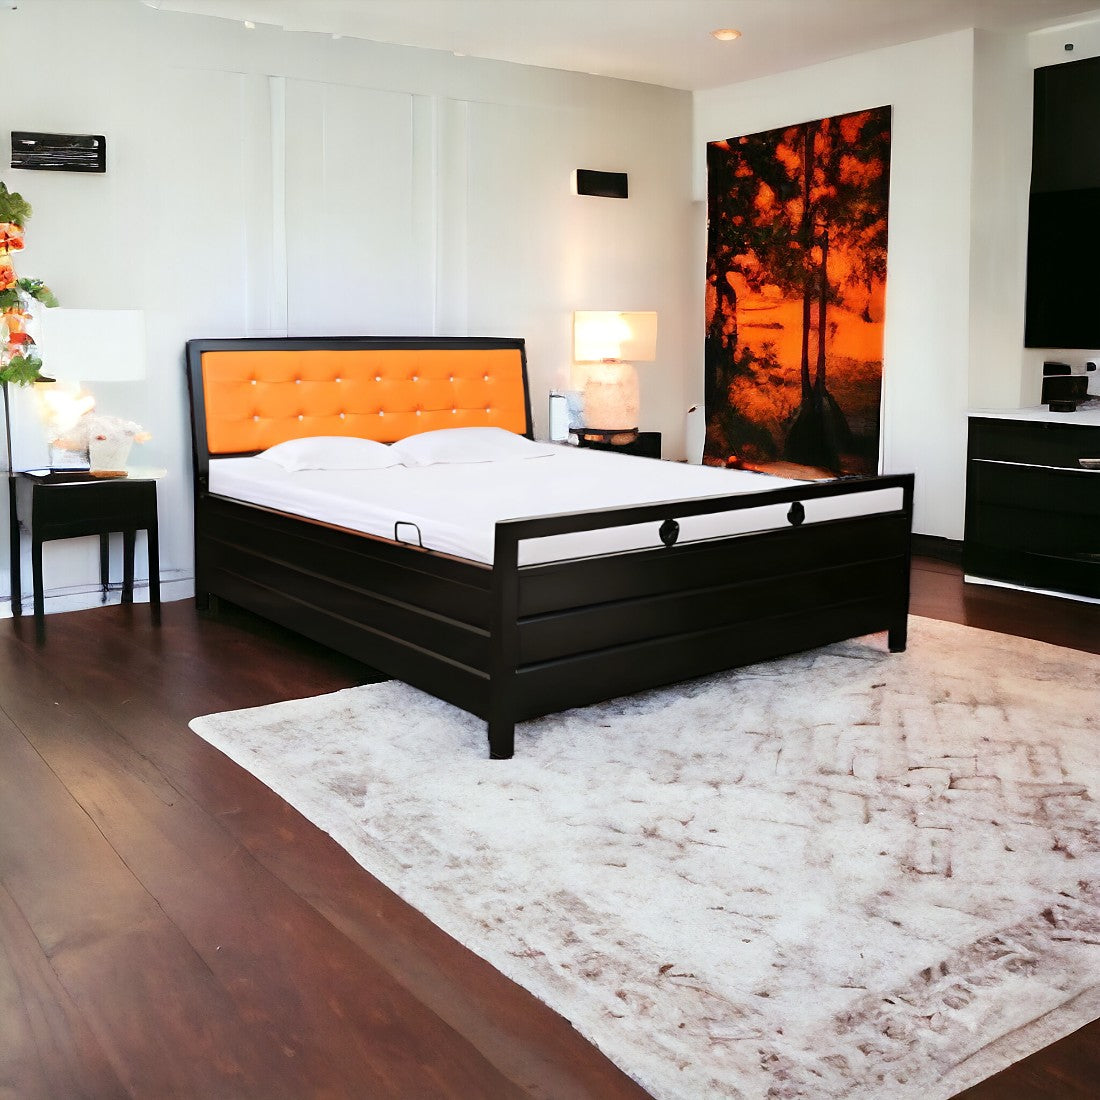 Heath Hydraulic Storage Single Metal Bed with Orange Cushion Headrest (Color - Black)